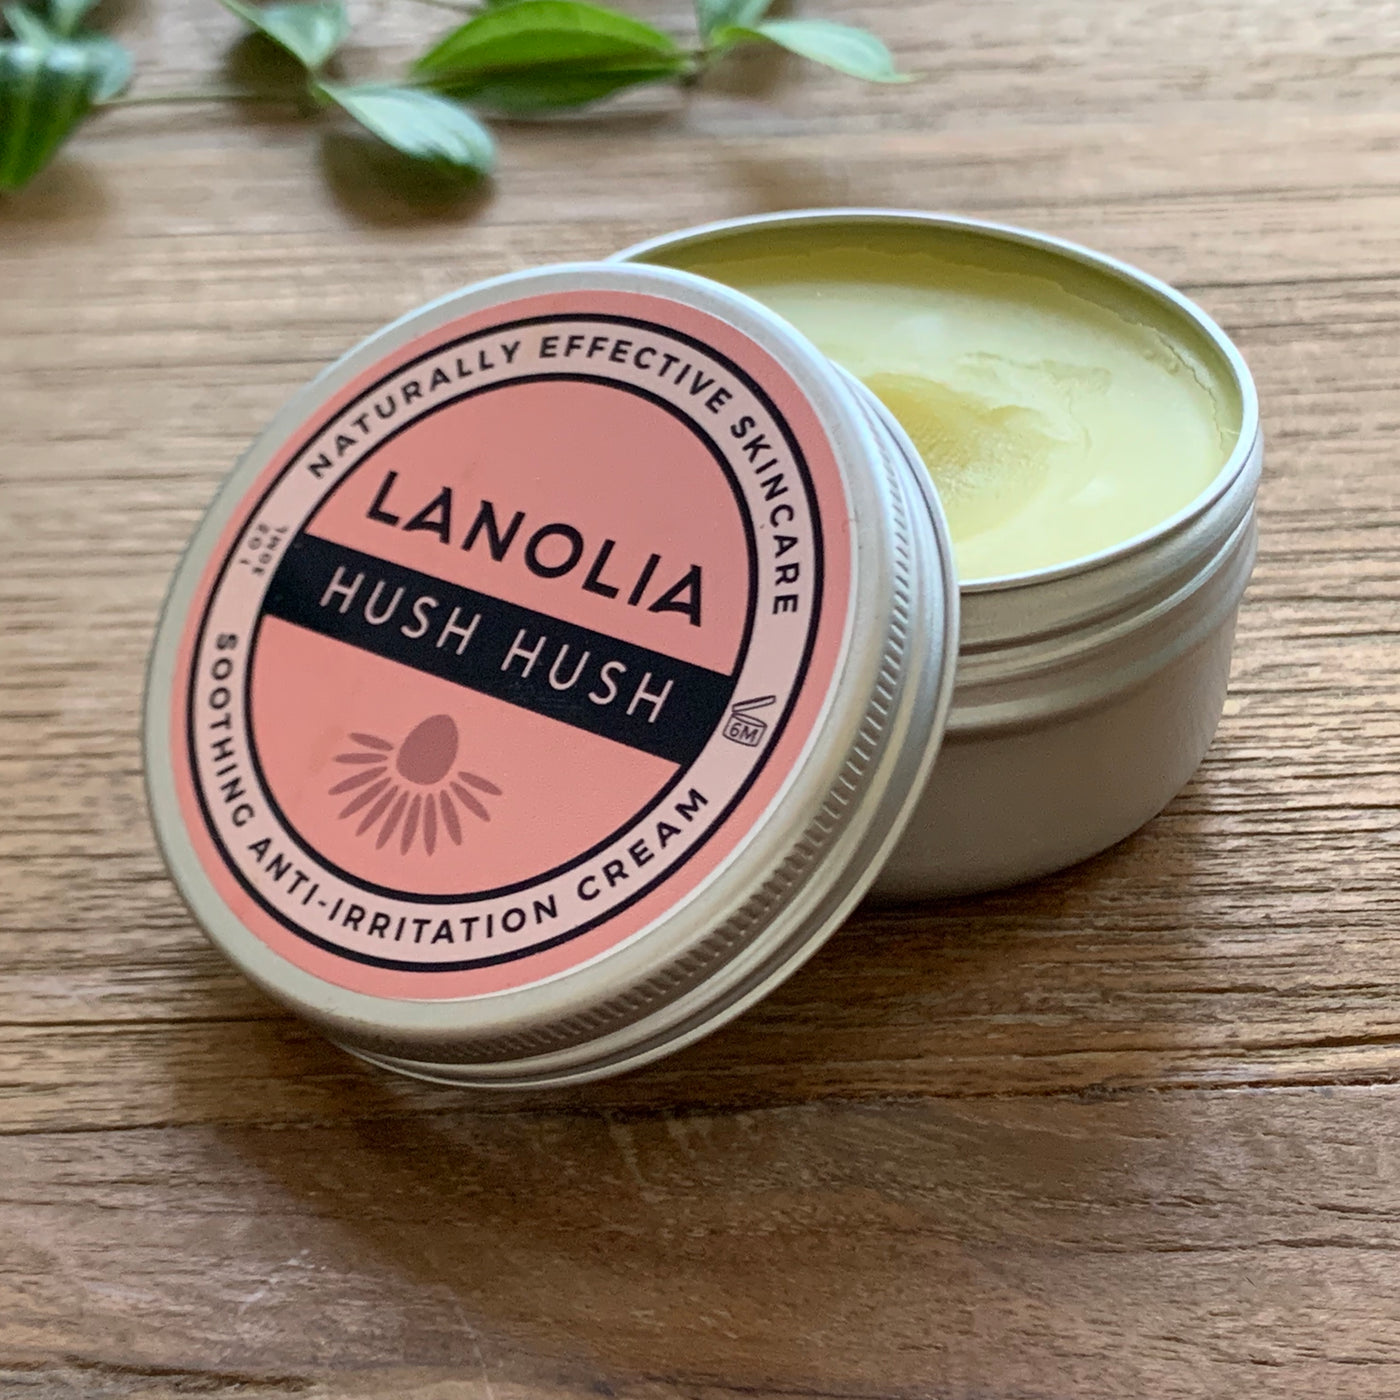 Lanolia Hush Hush - Chamomile Cream